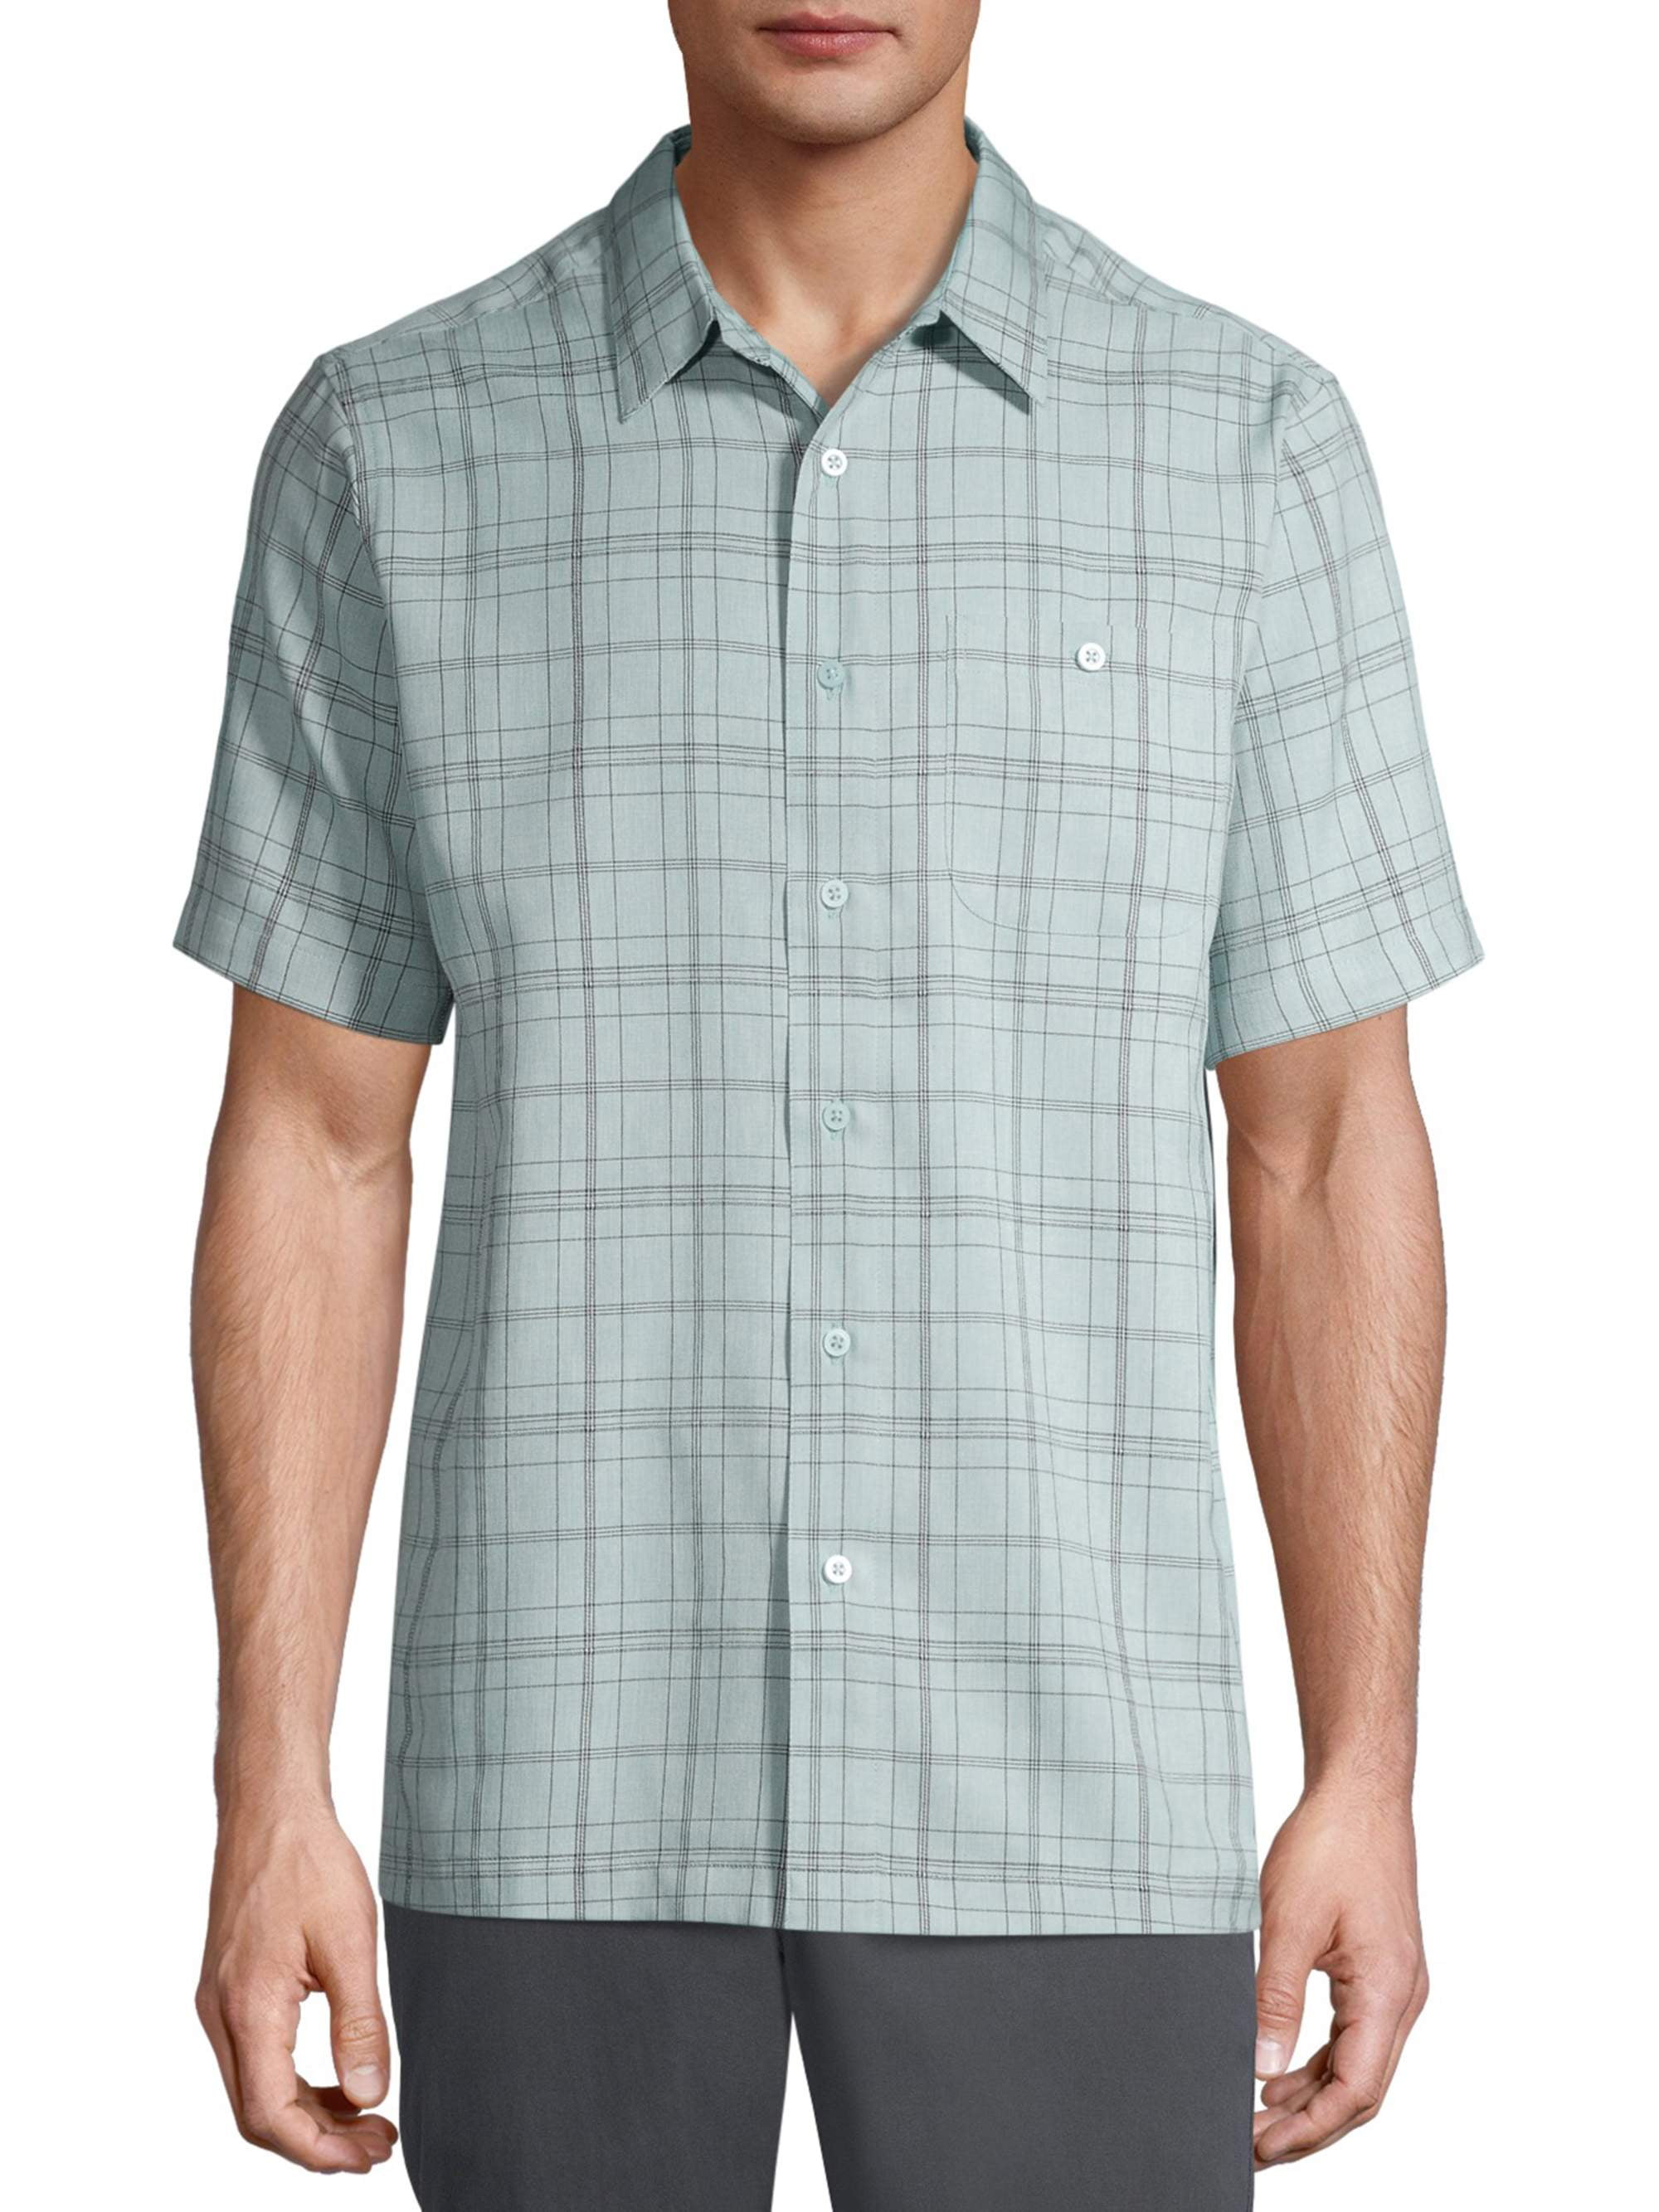 George Men's and Big Men's Short Sleeve Microfiber Shirt - Walmart.com